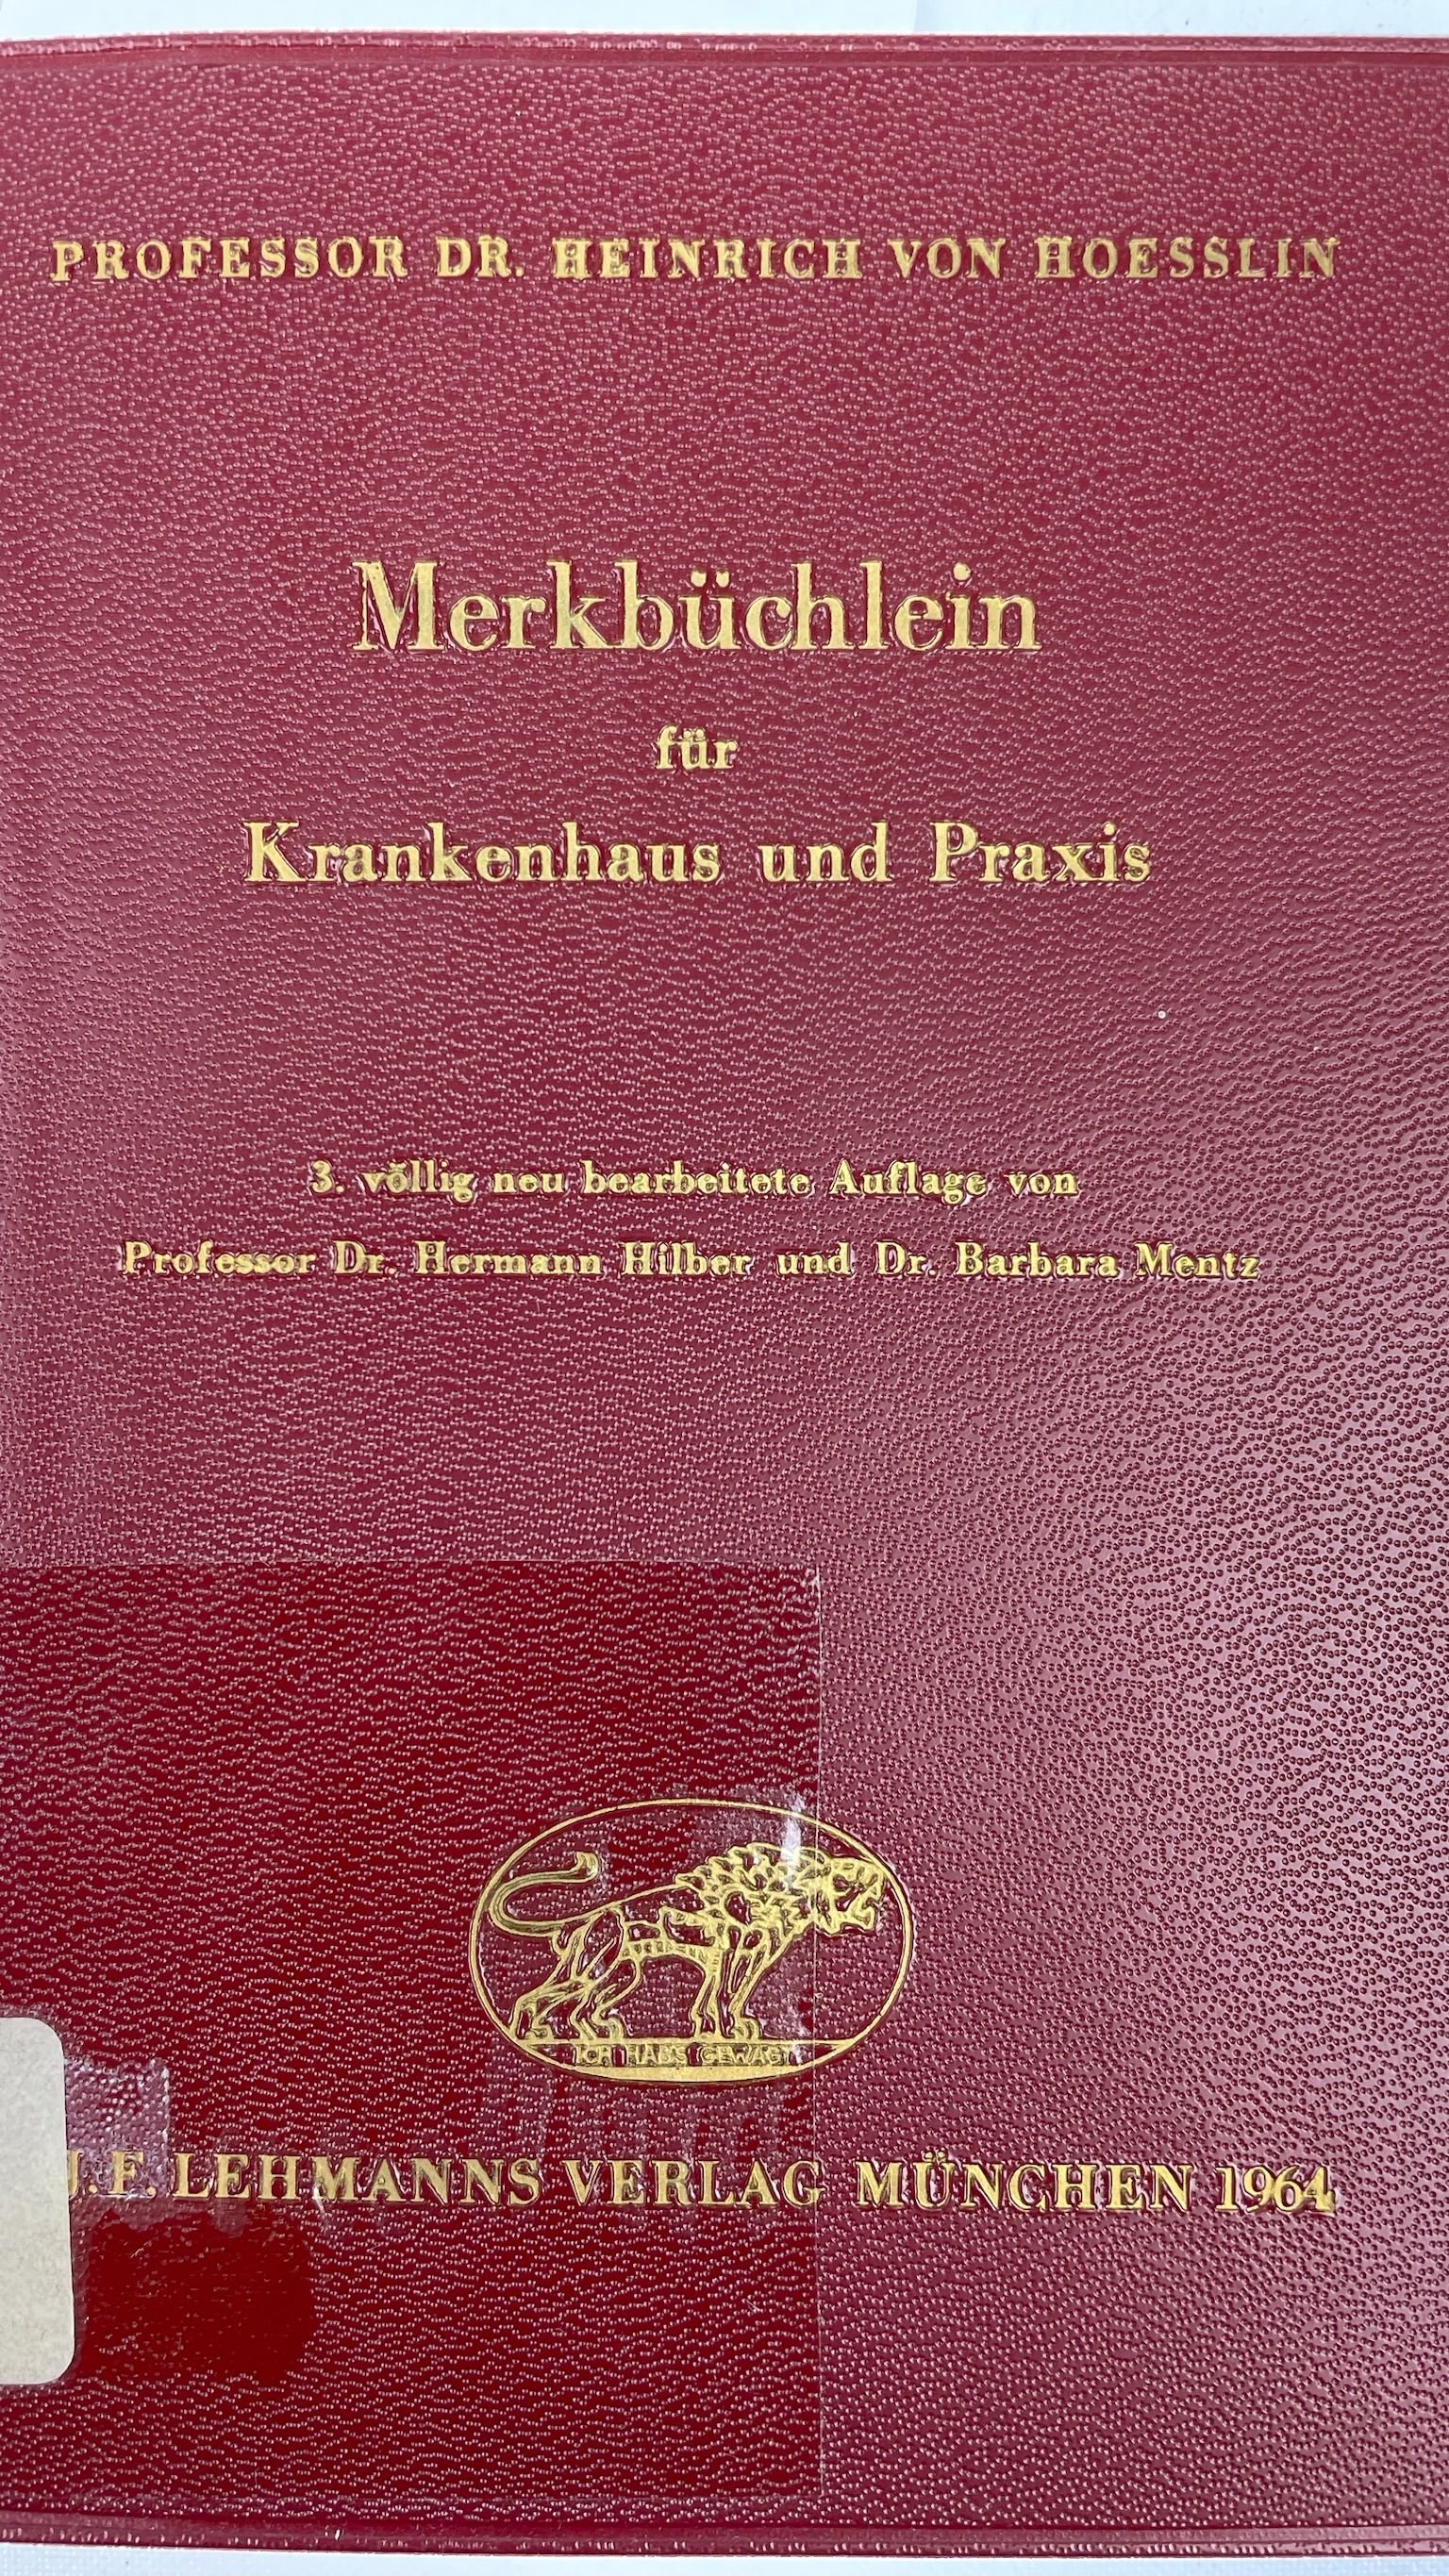 Merkbüchlein für Krankenhaus und Praxis (Krankenhausmuseum Bielefeld e.V. CC BY-NC-SA)